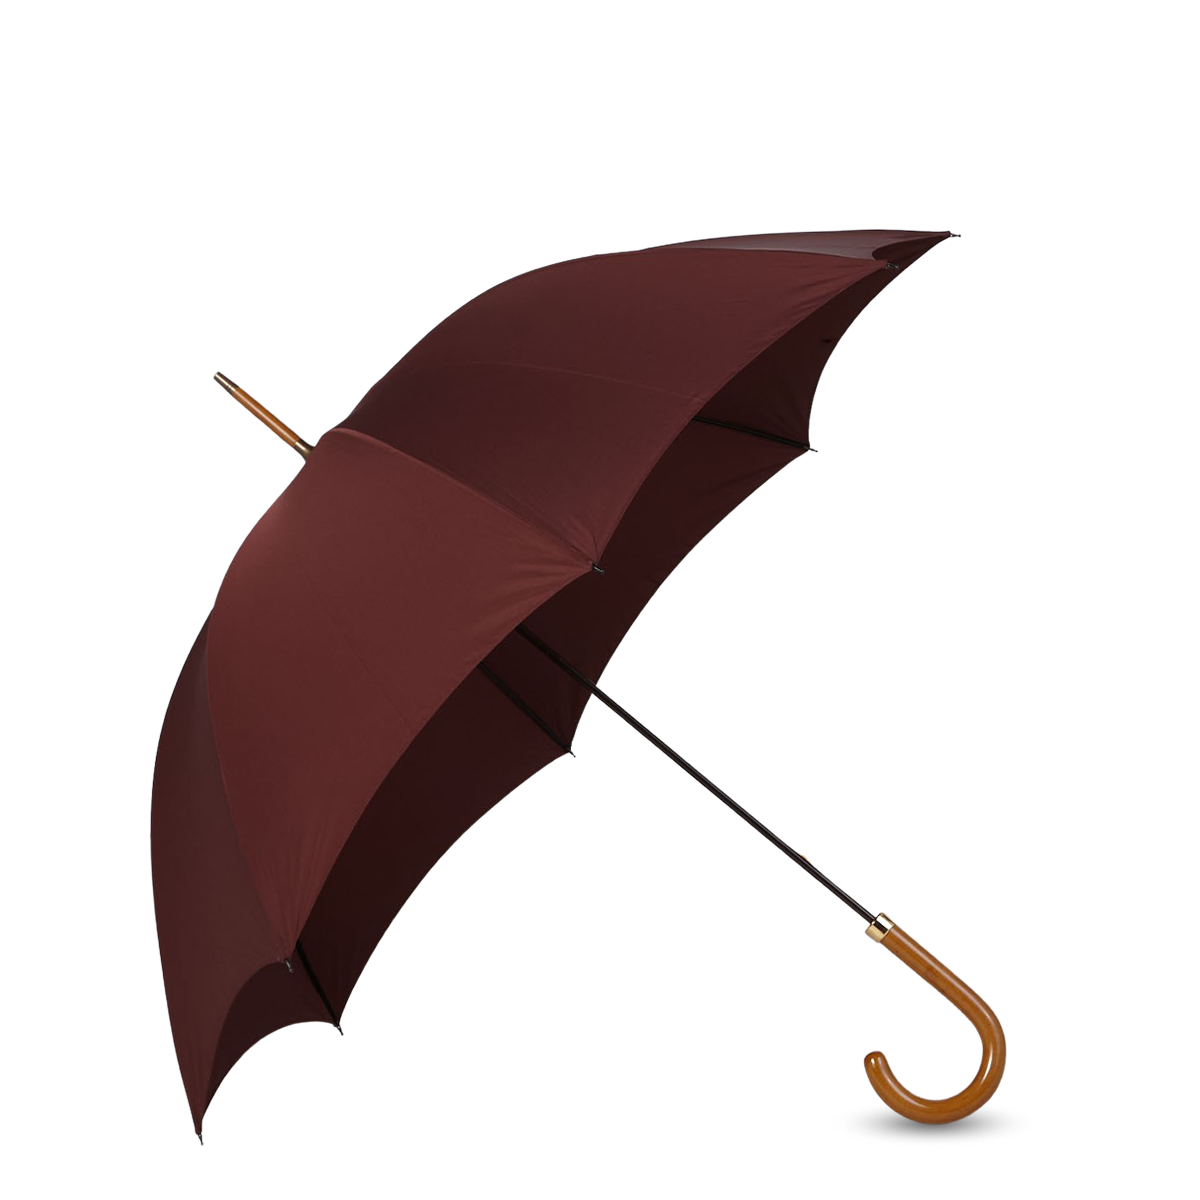 A handmade Bordeaux Polished Maple Handle Umbrella by Fox Umbrellas.